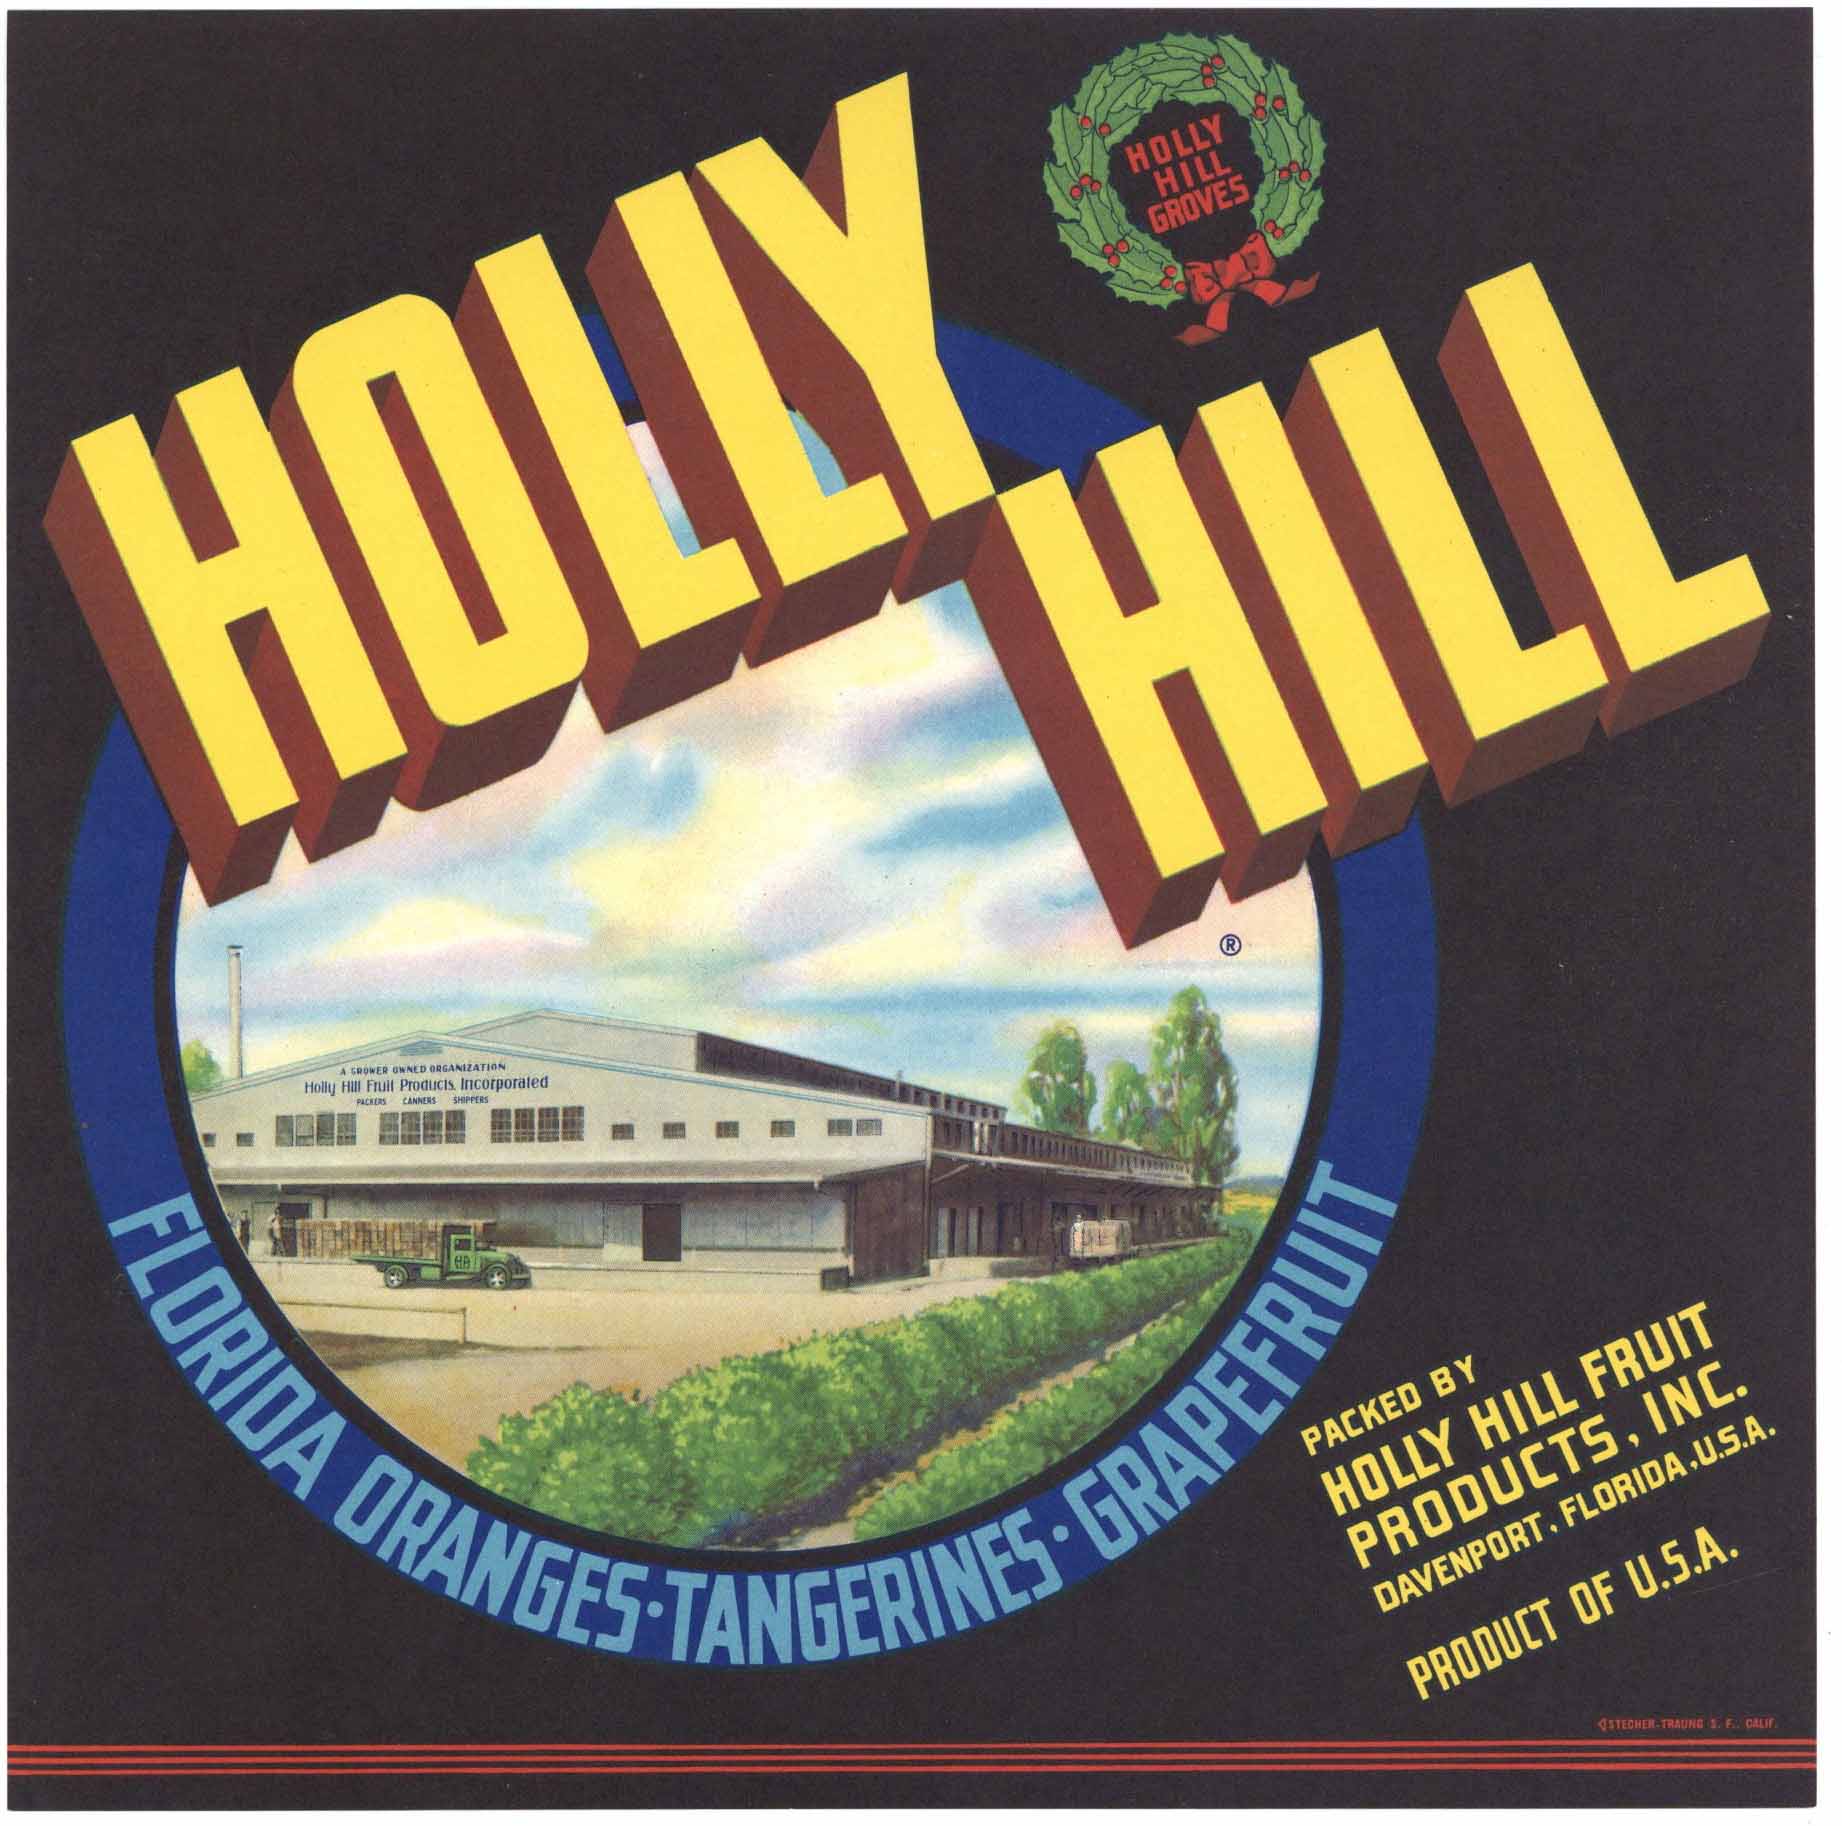 Holly Hill Brand Vintage Davenport Florida Citrus Crate Label, black